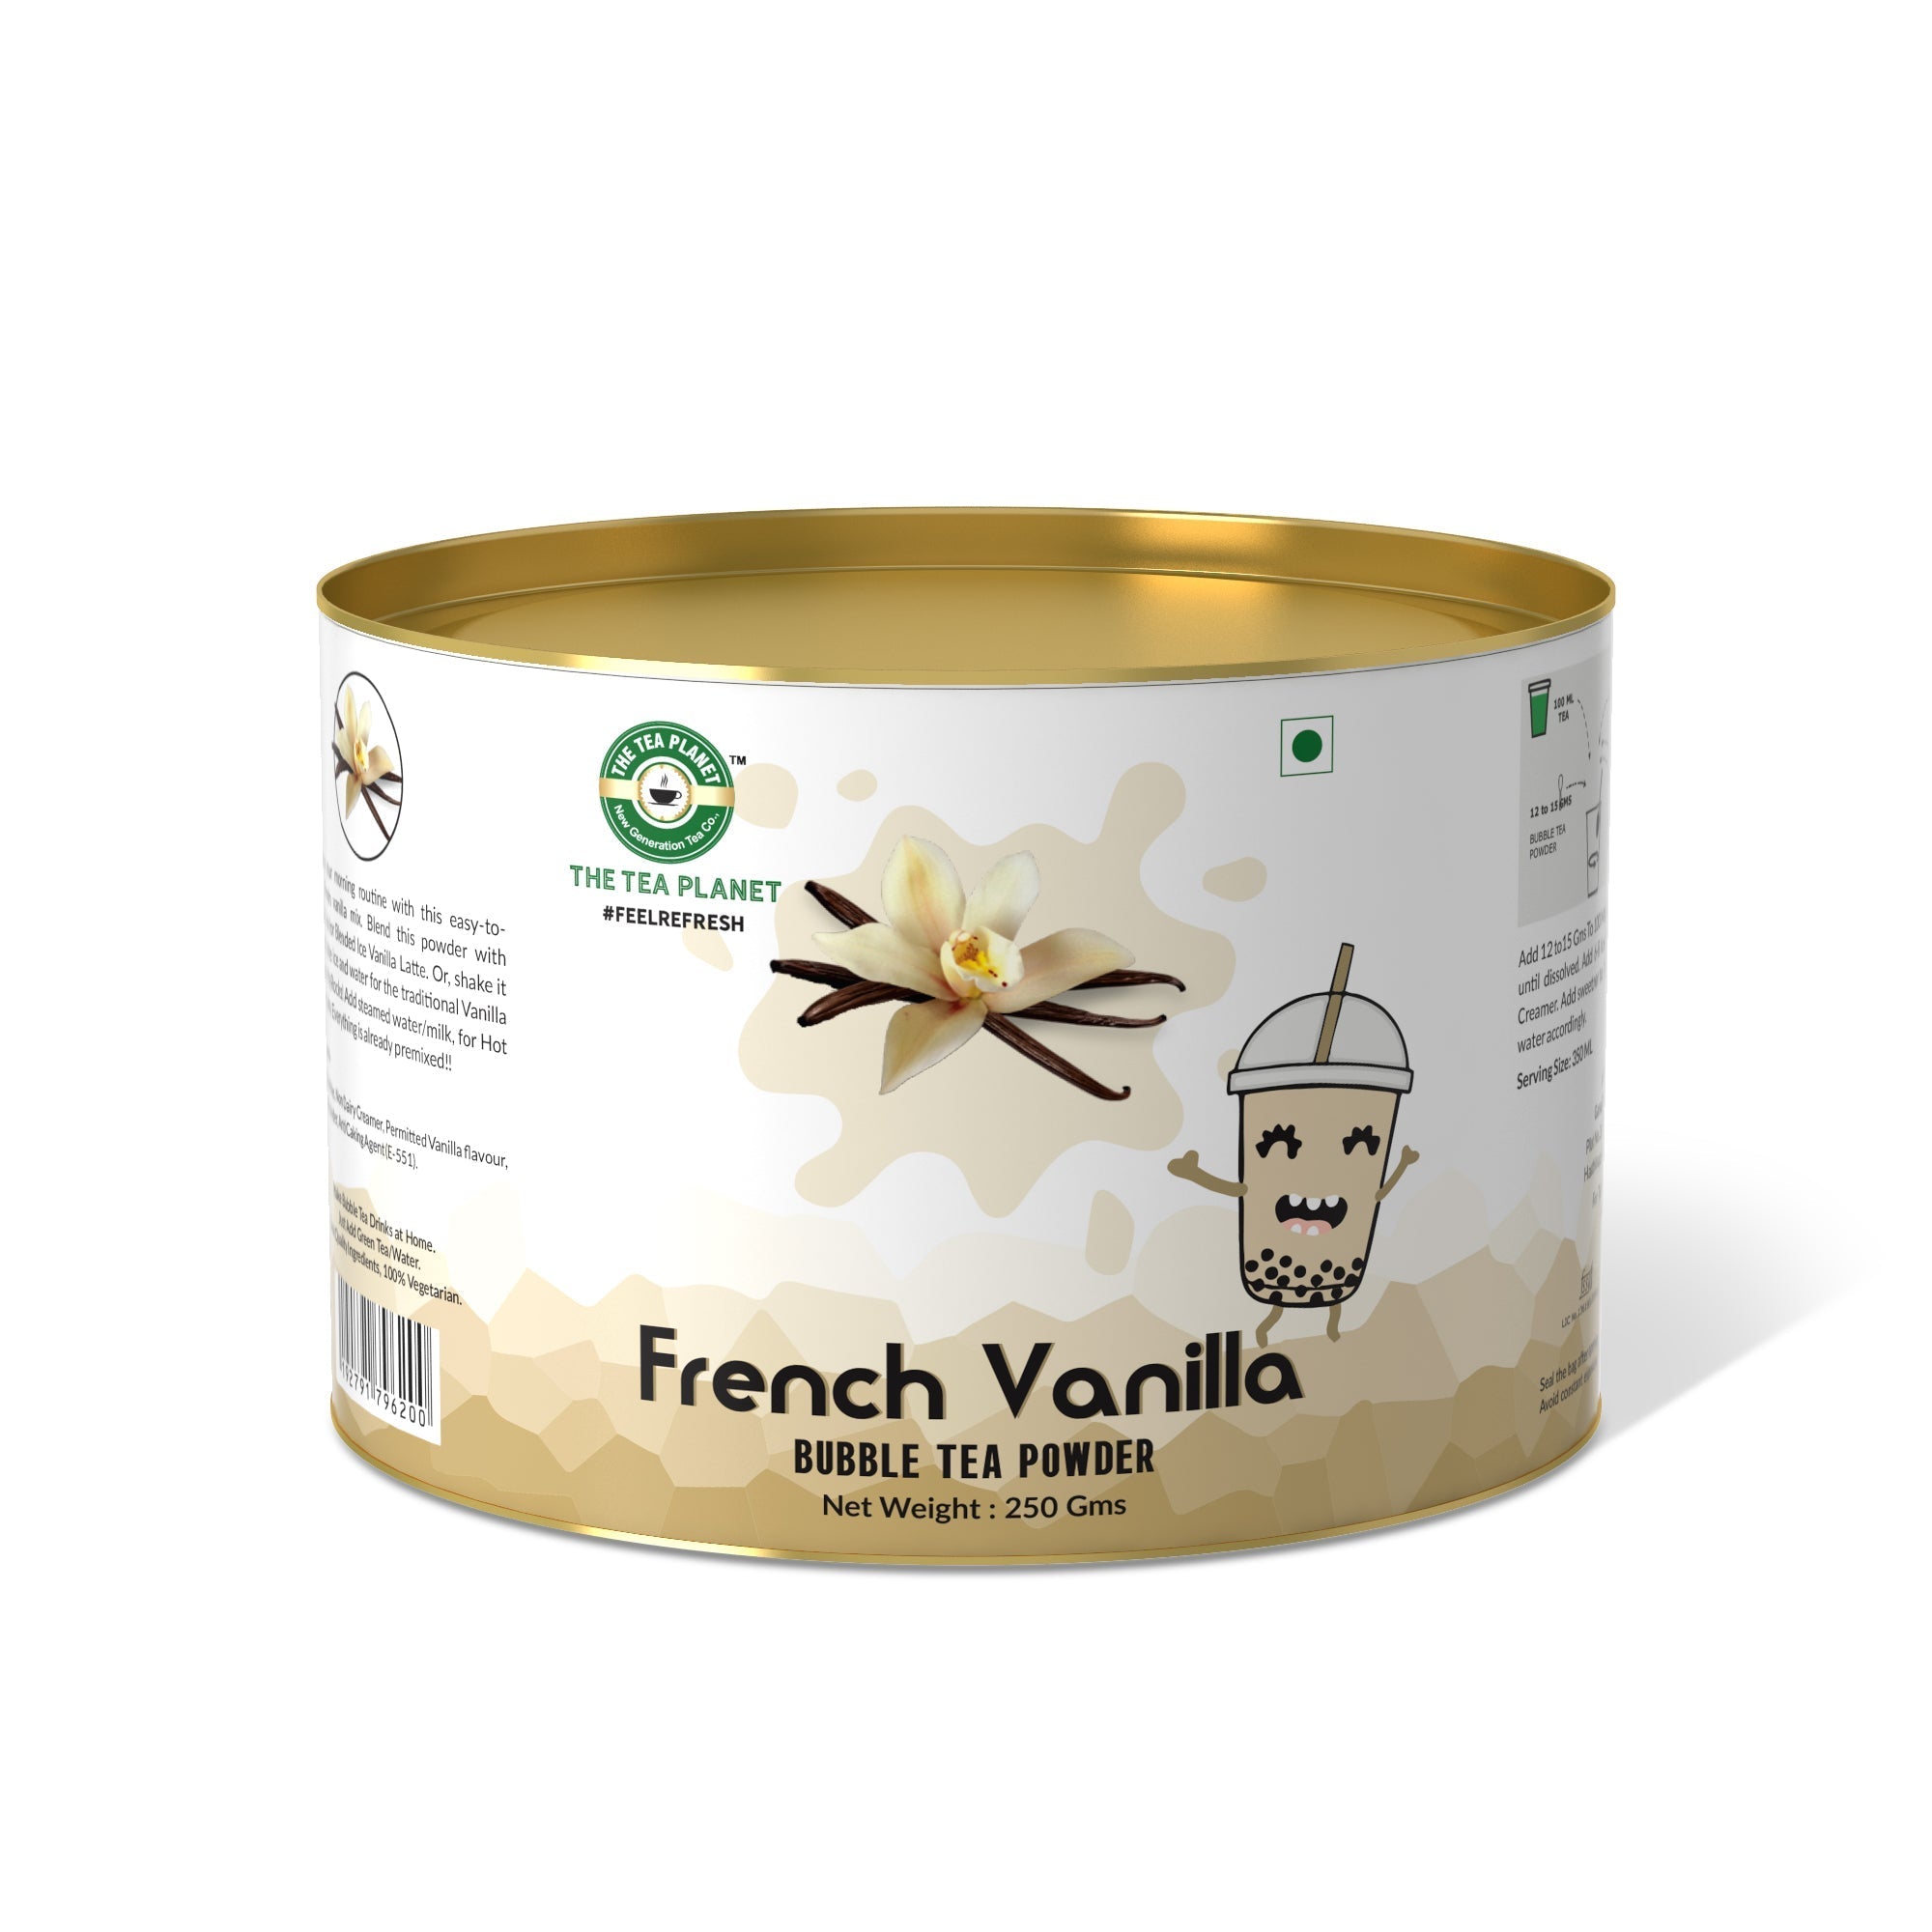 French Vanilla Bubble Tea Premix - 800 gms